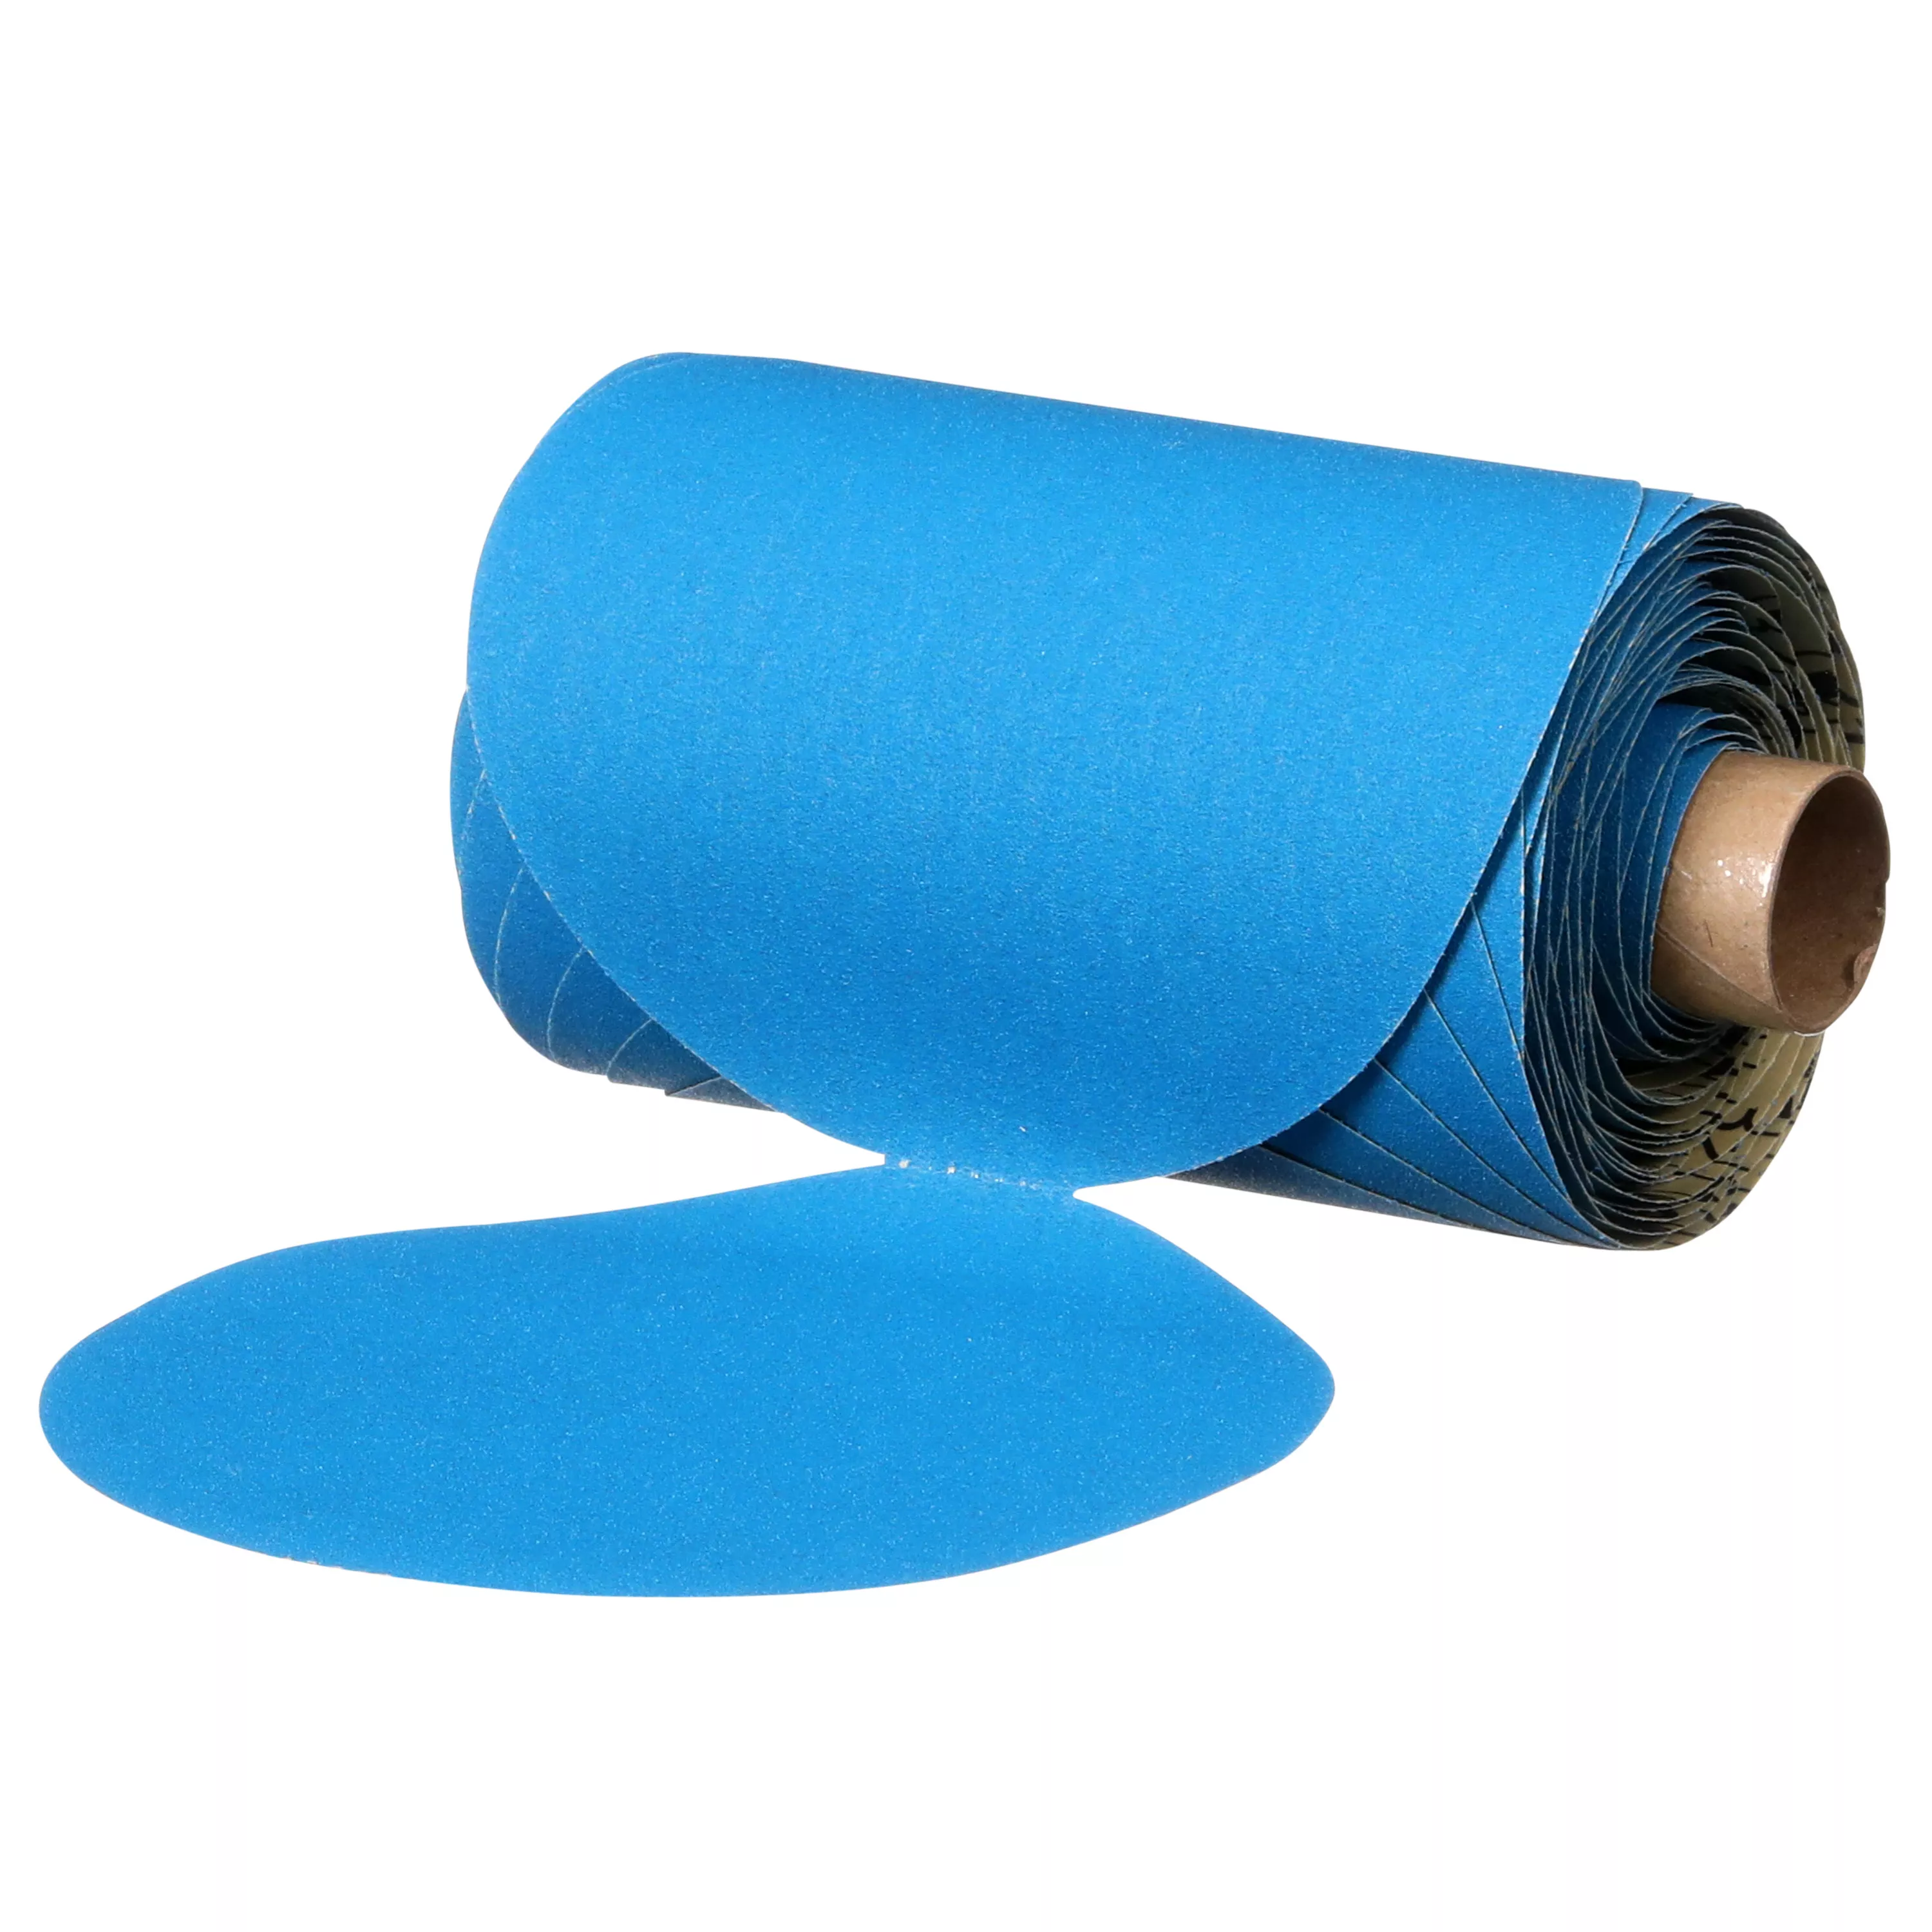 3M™ Stikit™ Blue Abrasive Disc Roll, 36268, 5 in, 180 grade, No Hole, 100 discs per roll, 5 rolls per case